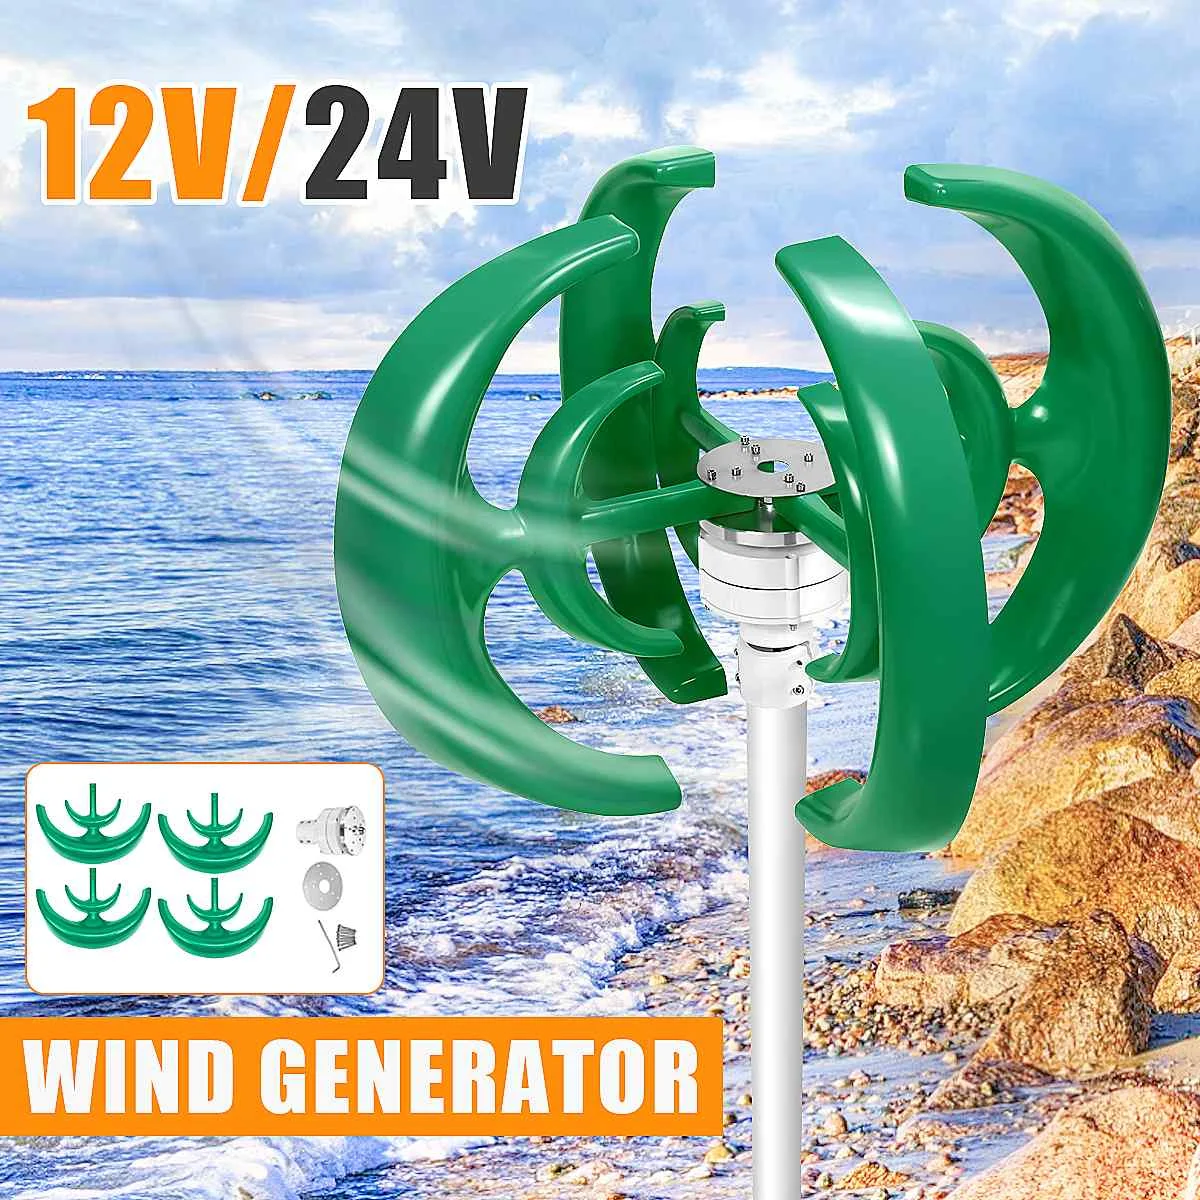 Details about   4500W DC 24V 4 Blades Lantern Wind Turbine Generator Vertical Axis Windmill 